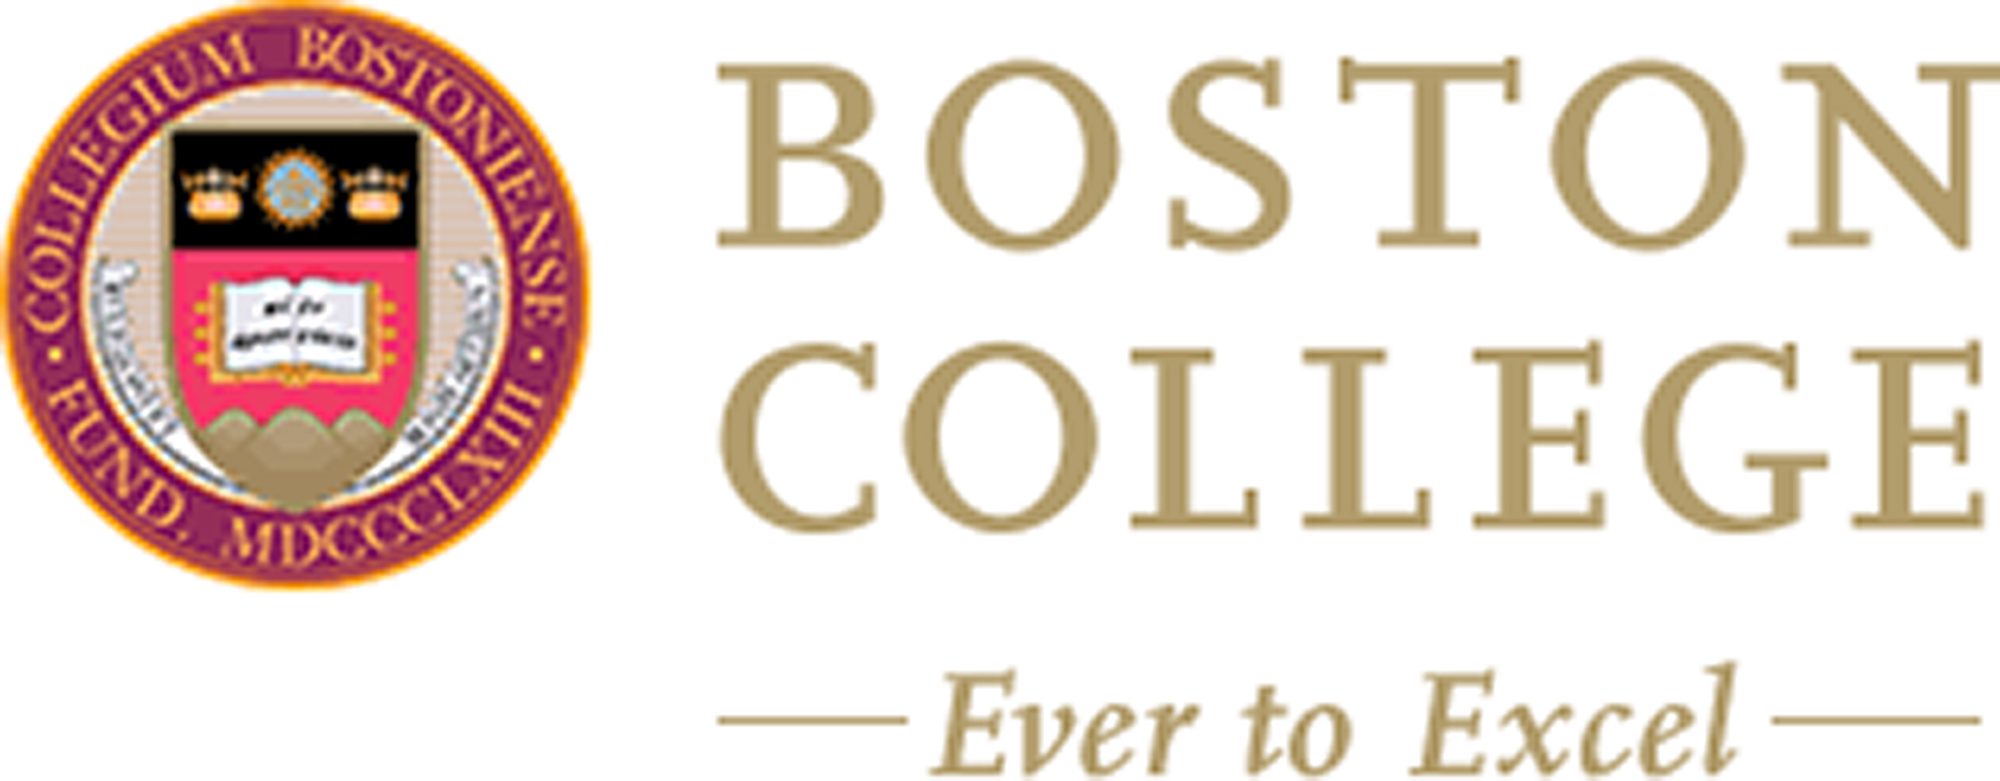 image of boston college logo